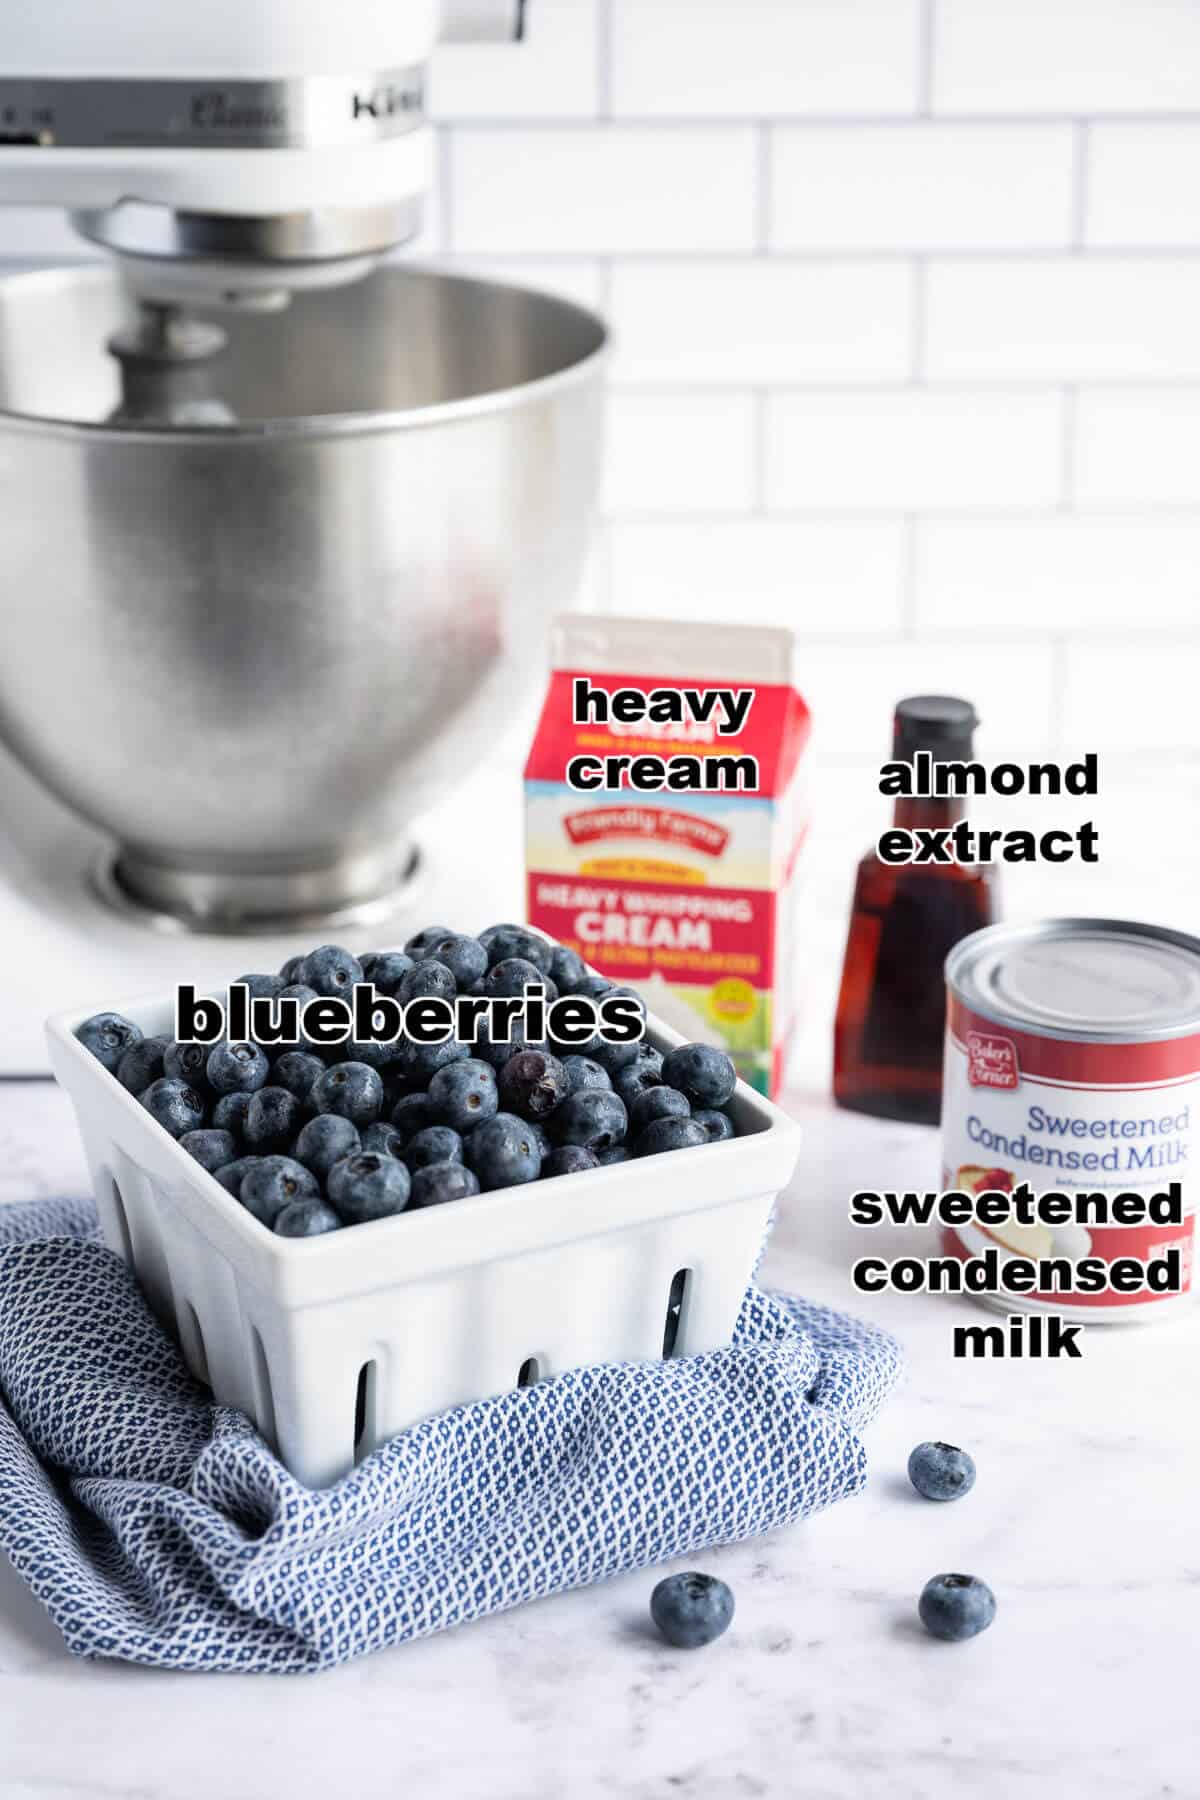 Ingredients for no-churn blueberry ice cream: heavy cream, sweetened condensed milk, blueberries, almond extract.